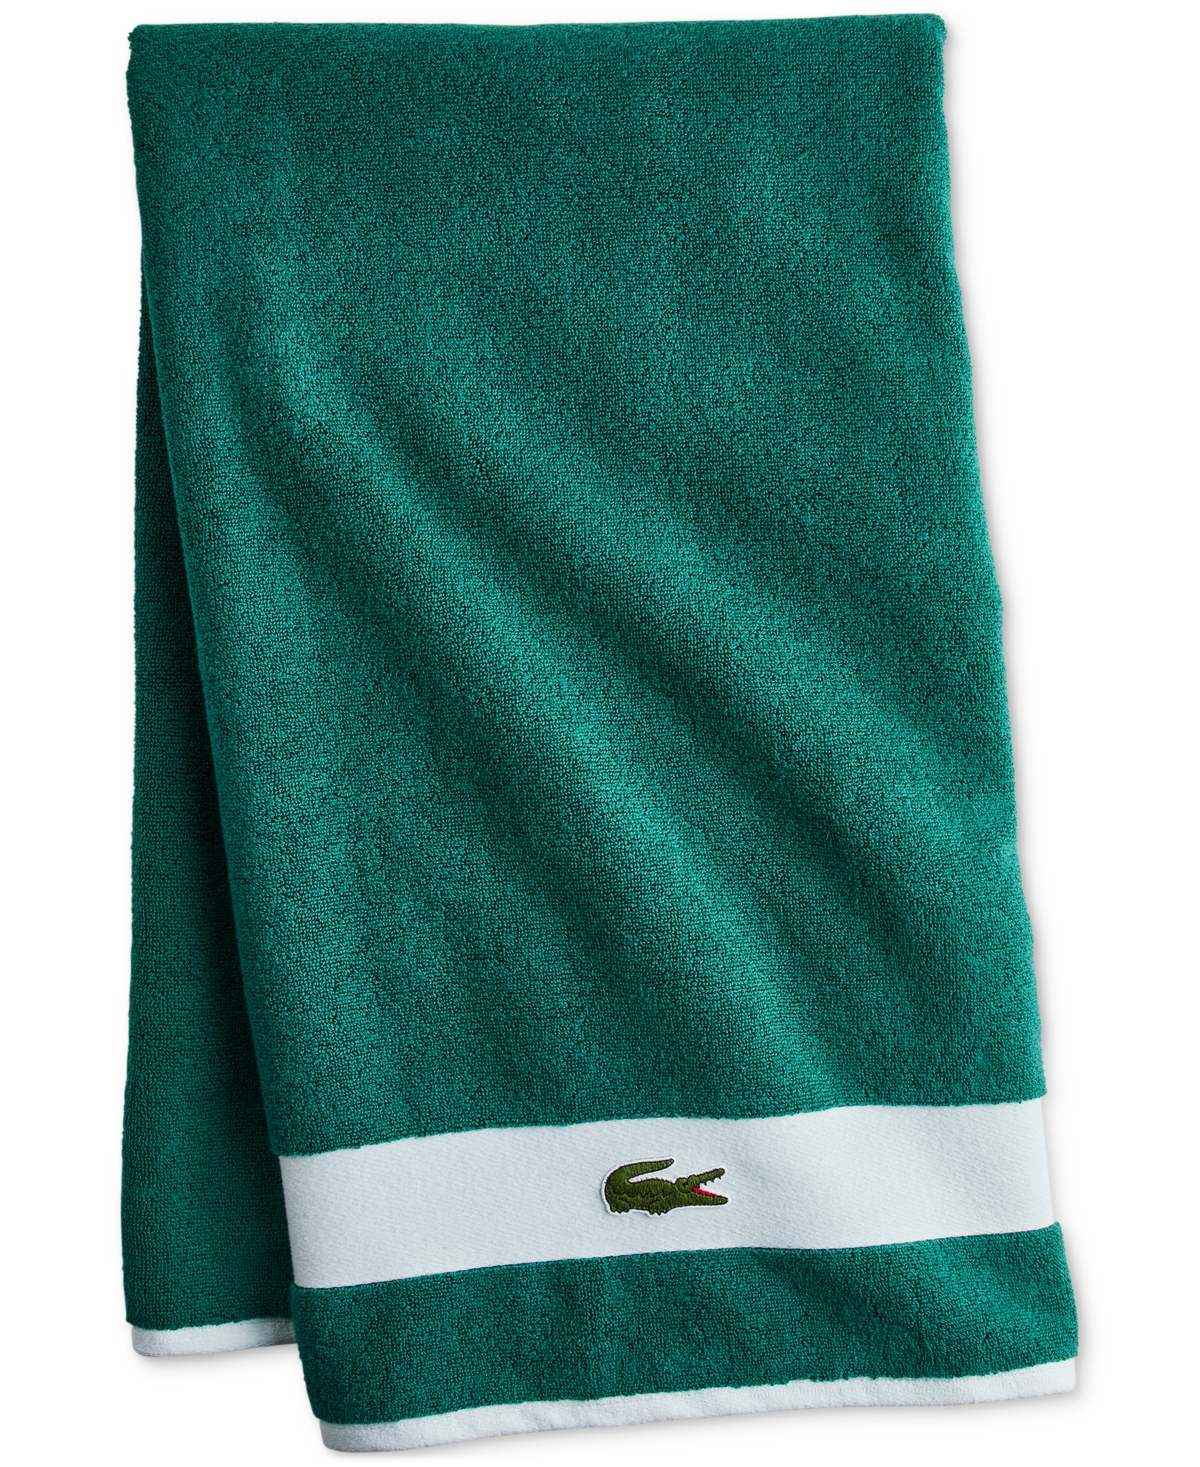 Lacoste Heritage Sport Stripe Cotton Bath Towel In Croc Green